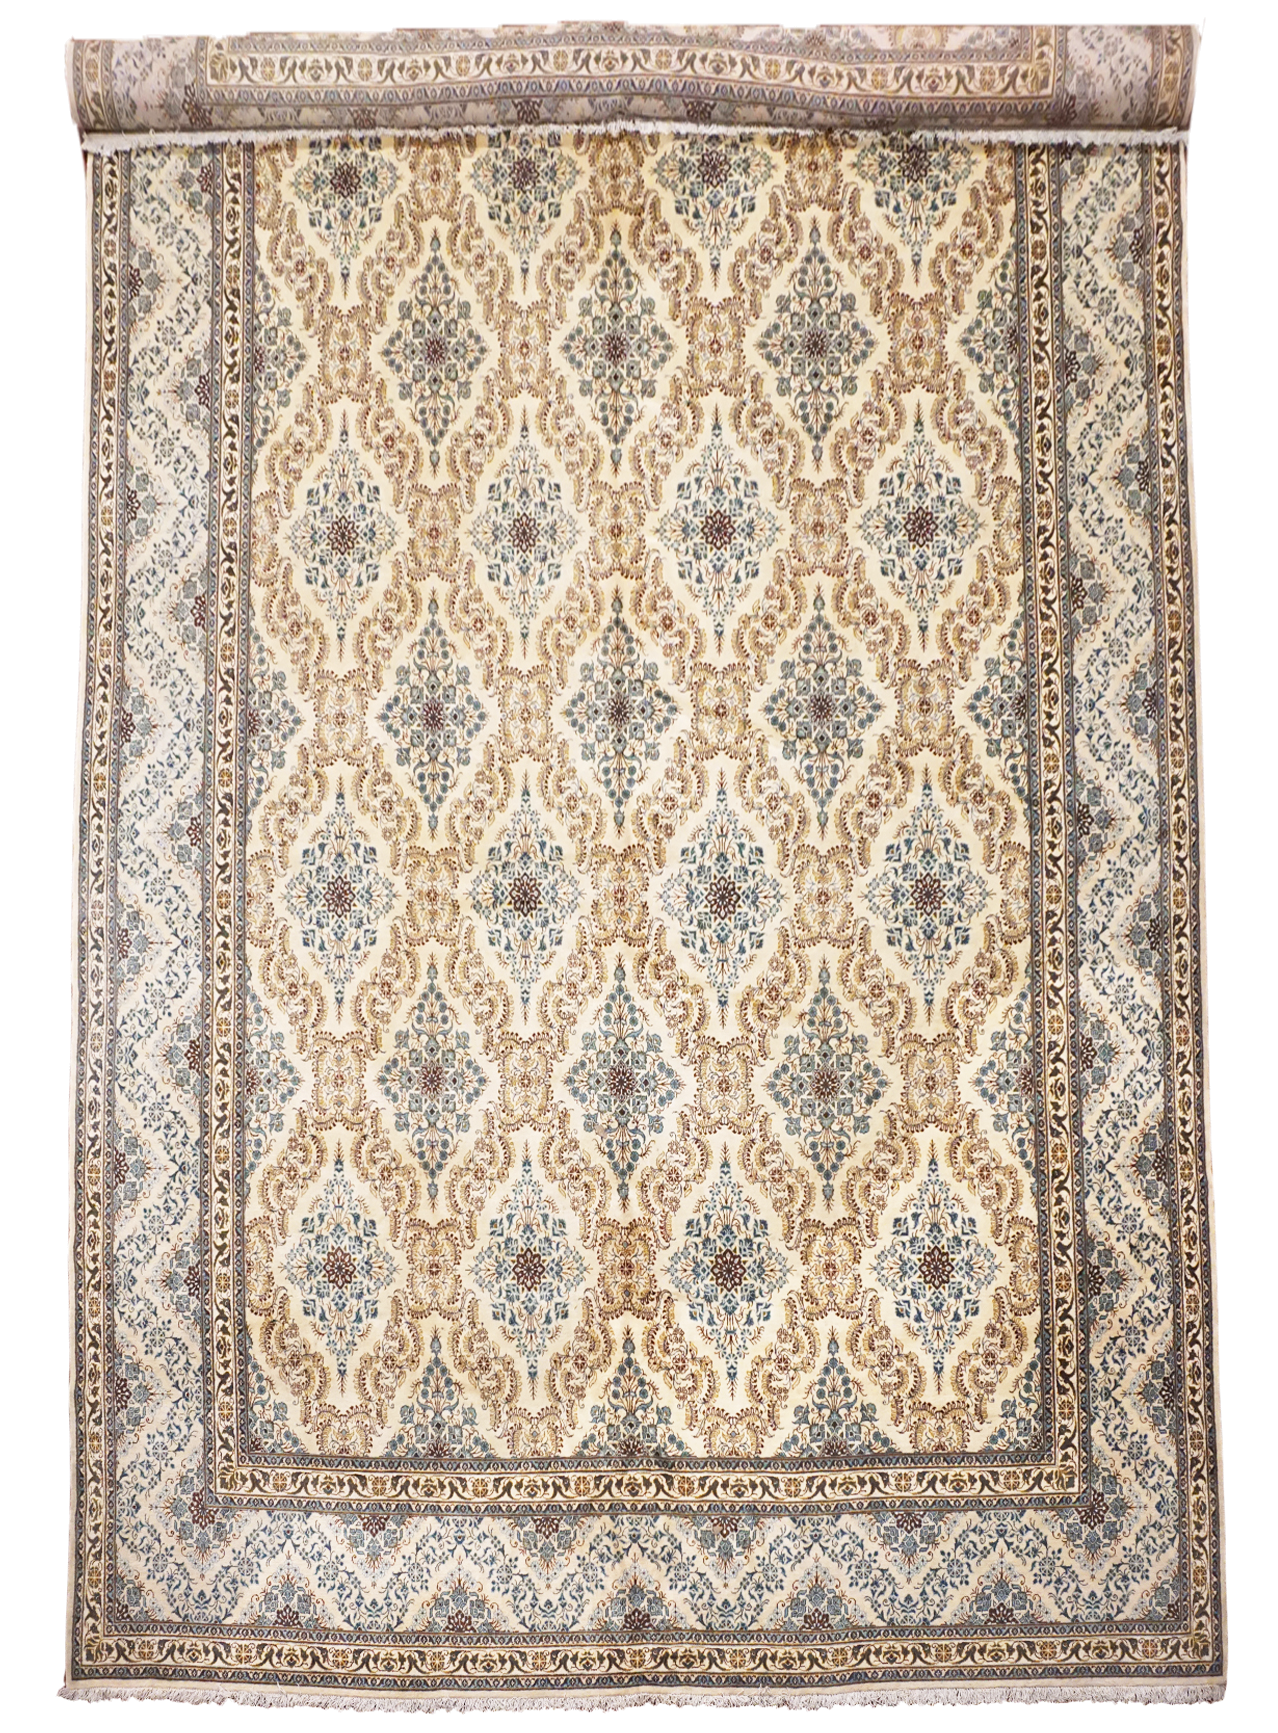 11X17 Antique Fine Persian Kashan Rug, circa 1940